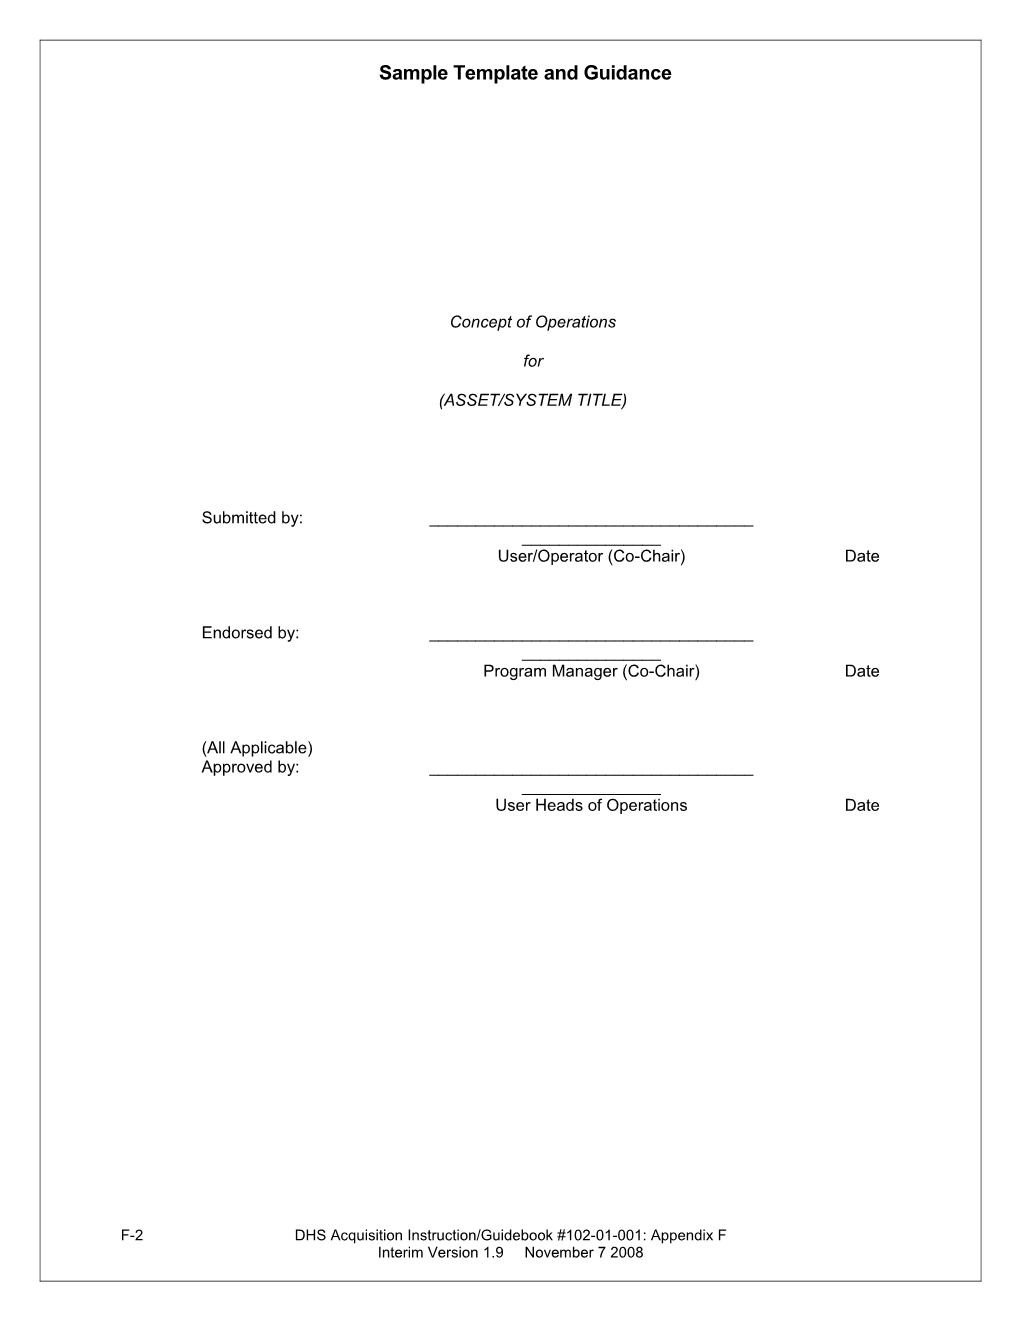 DHS Acquisition Instruction/Guidebook #102-01-001: Appendix F F-11